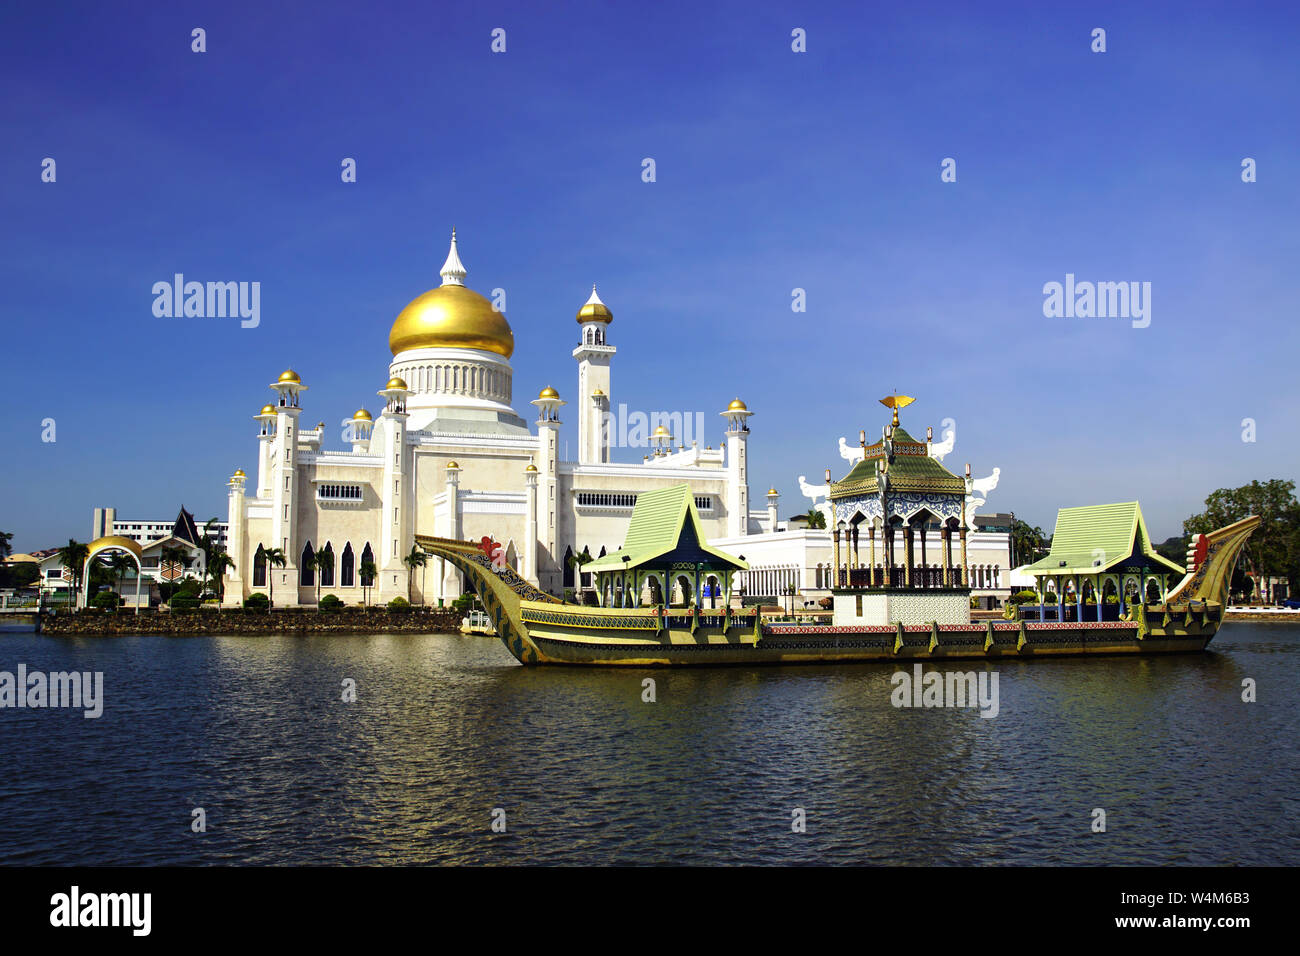 Omar Ali Saifuddien Mosque and Ceremonial Barge in Bandar Seri Begawan, Brunei Darussalam Stock Photo